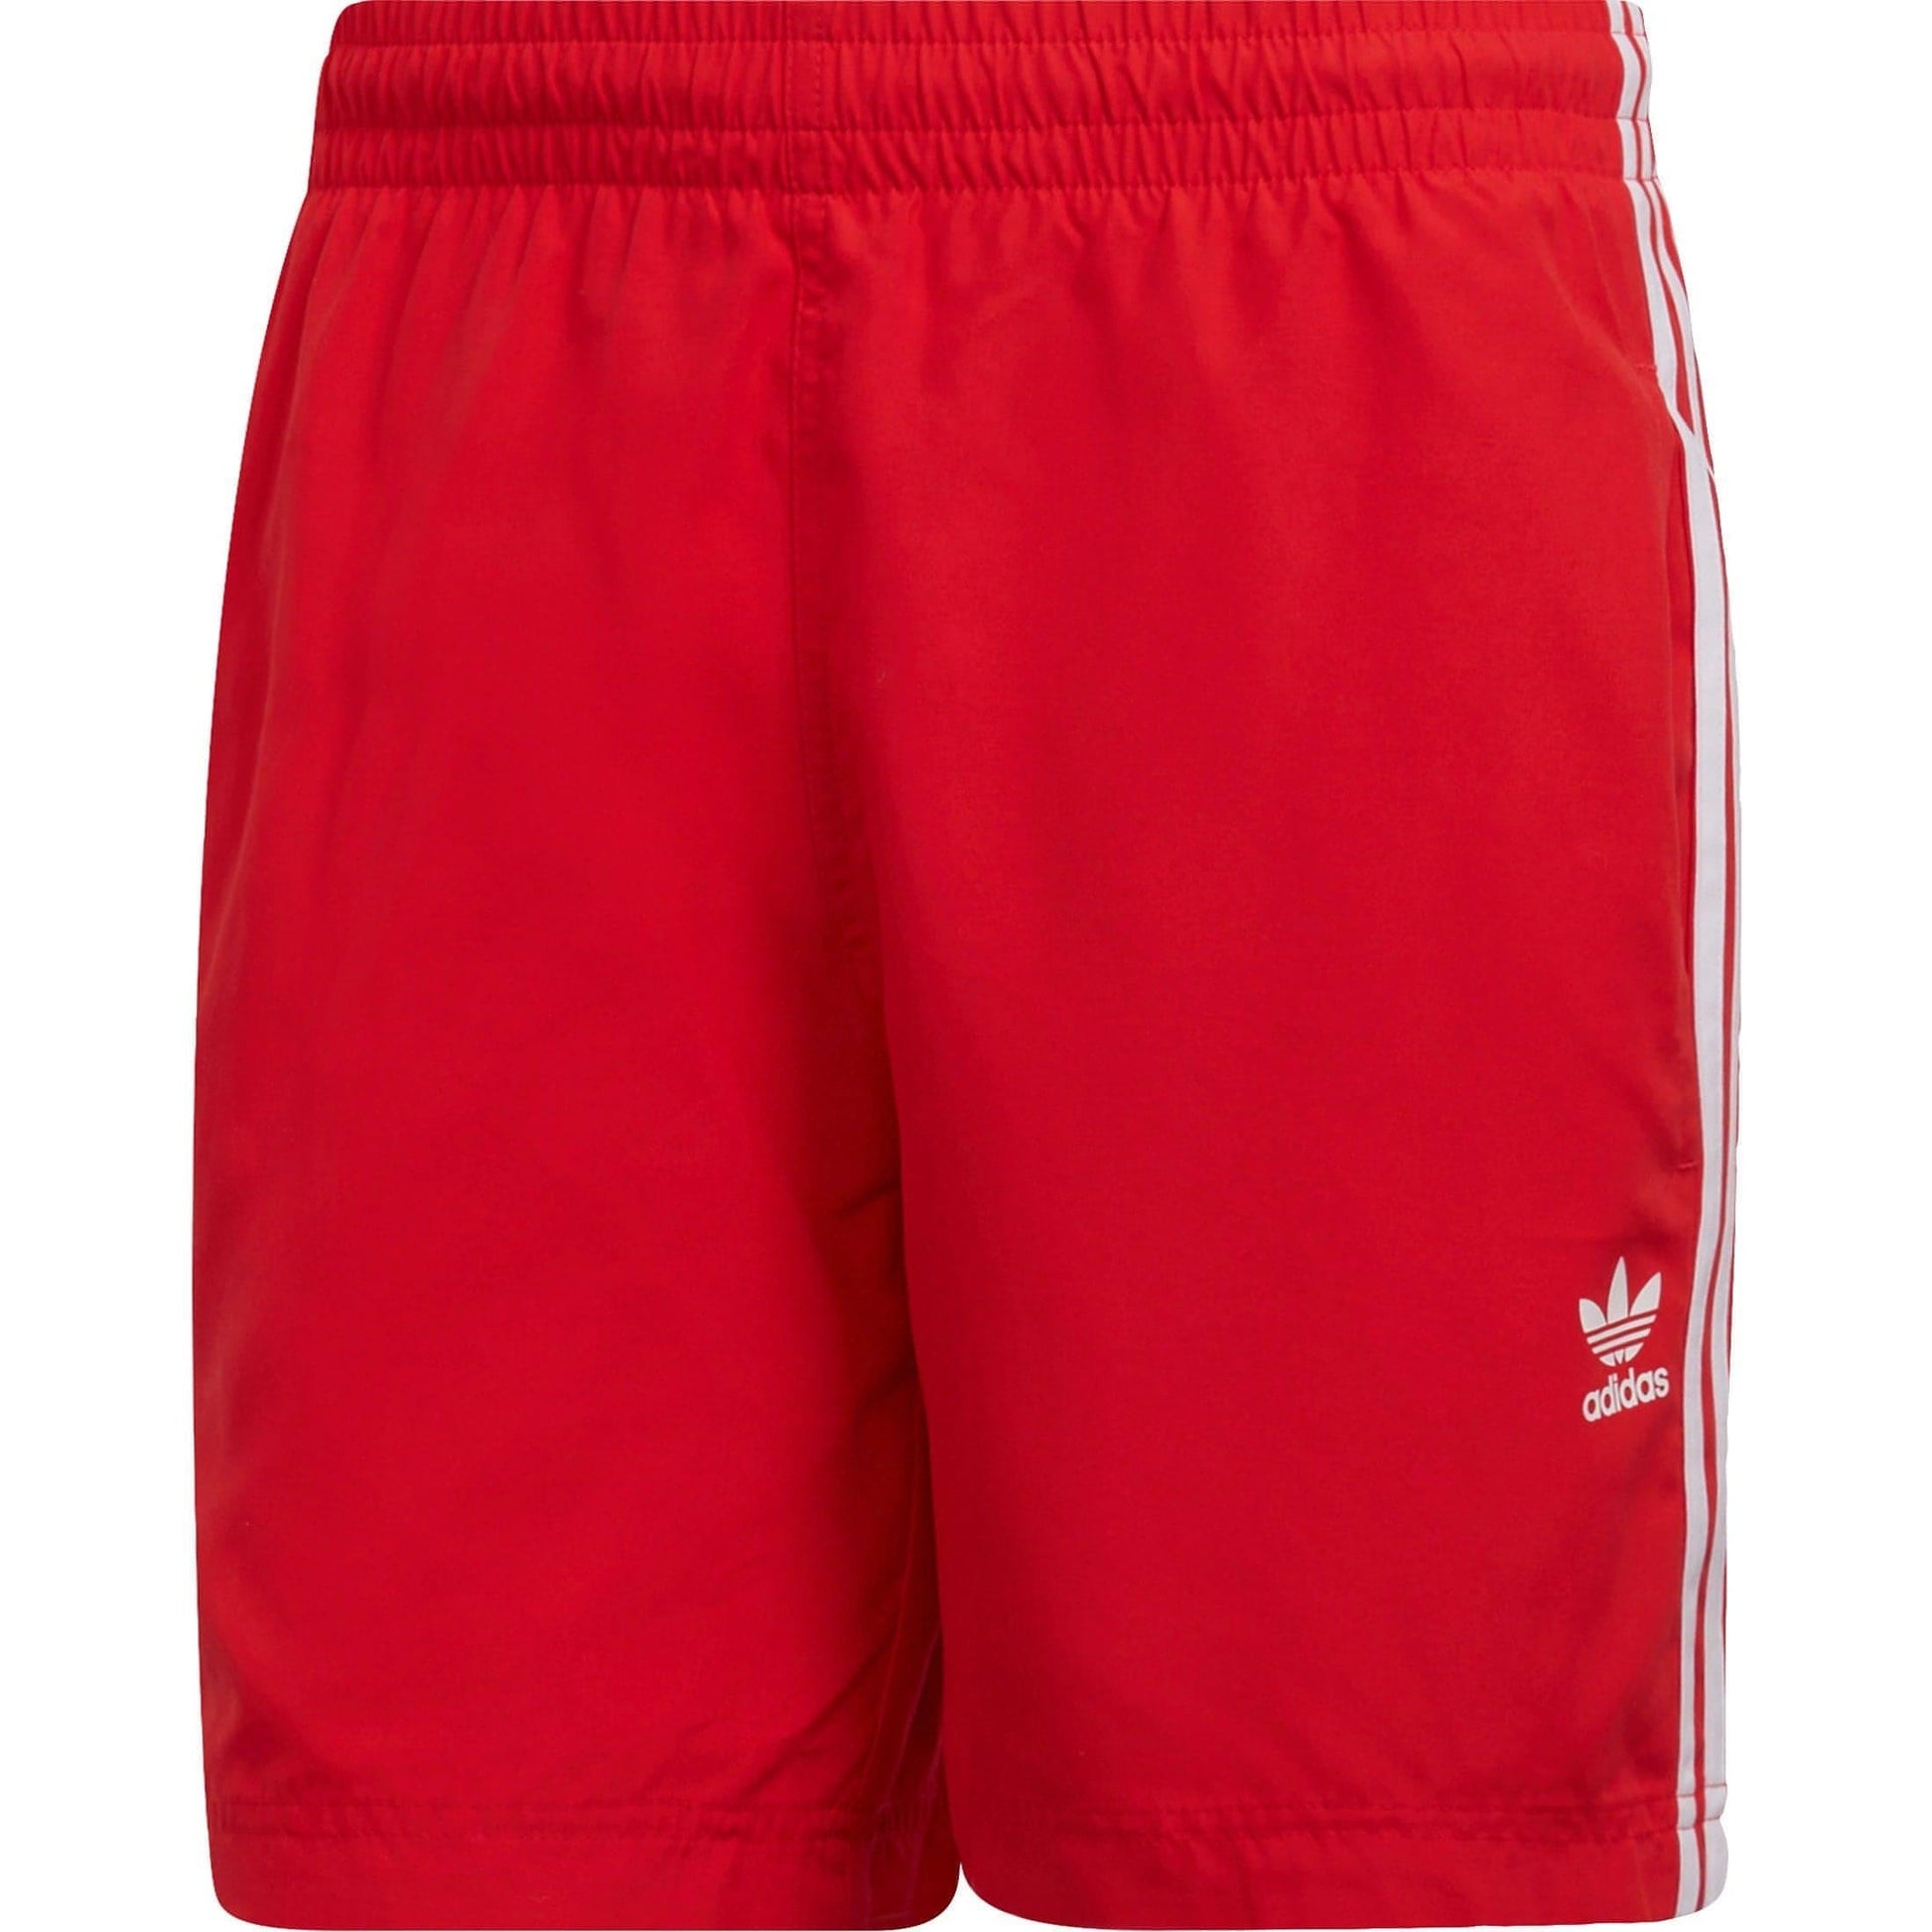 Adidas Adicolour Classic Stripes Swim Shorts Hf2120 Front - Front View